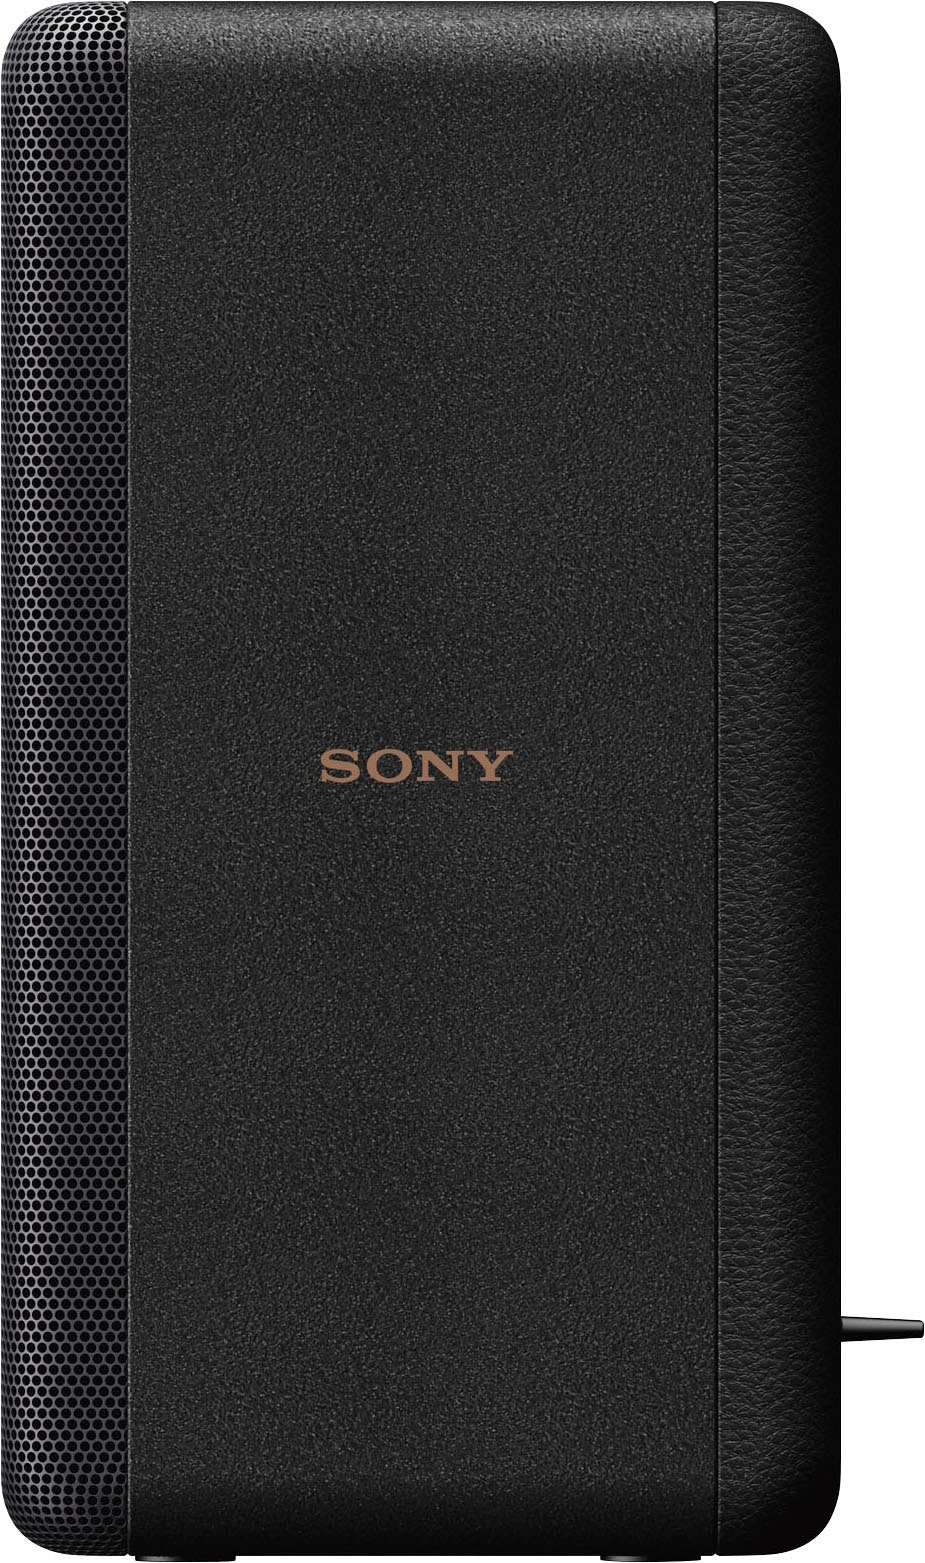 Sony SA-RS3S kabellose zweifache Rear- (WLAN, W) 100 Stereo Lautsprecher